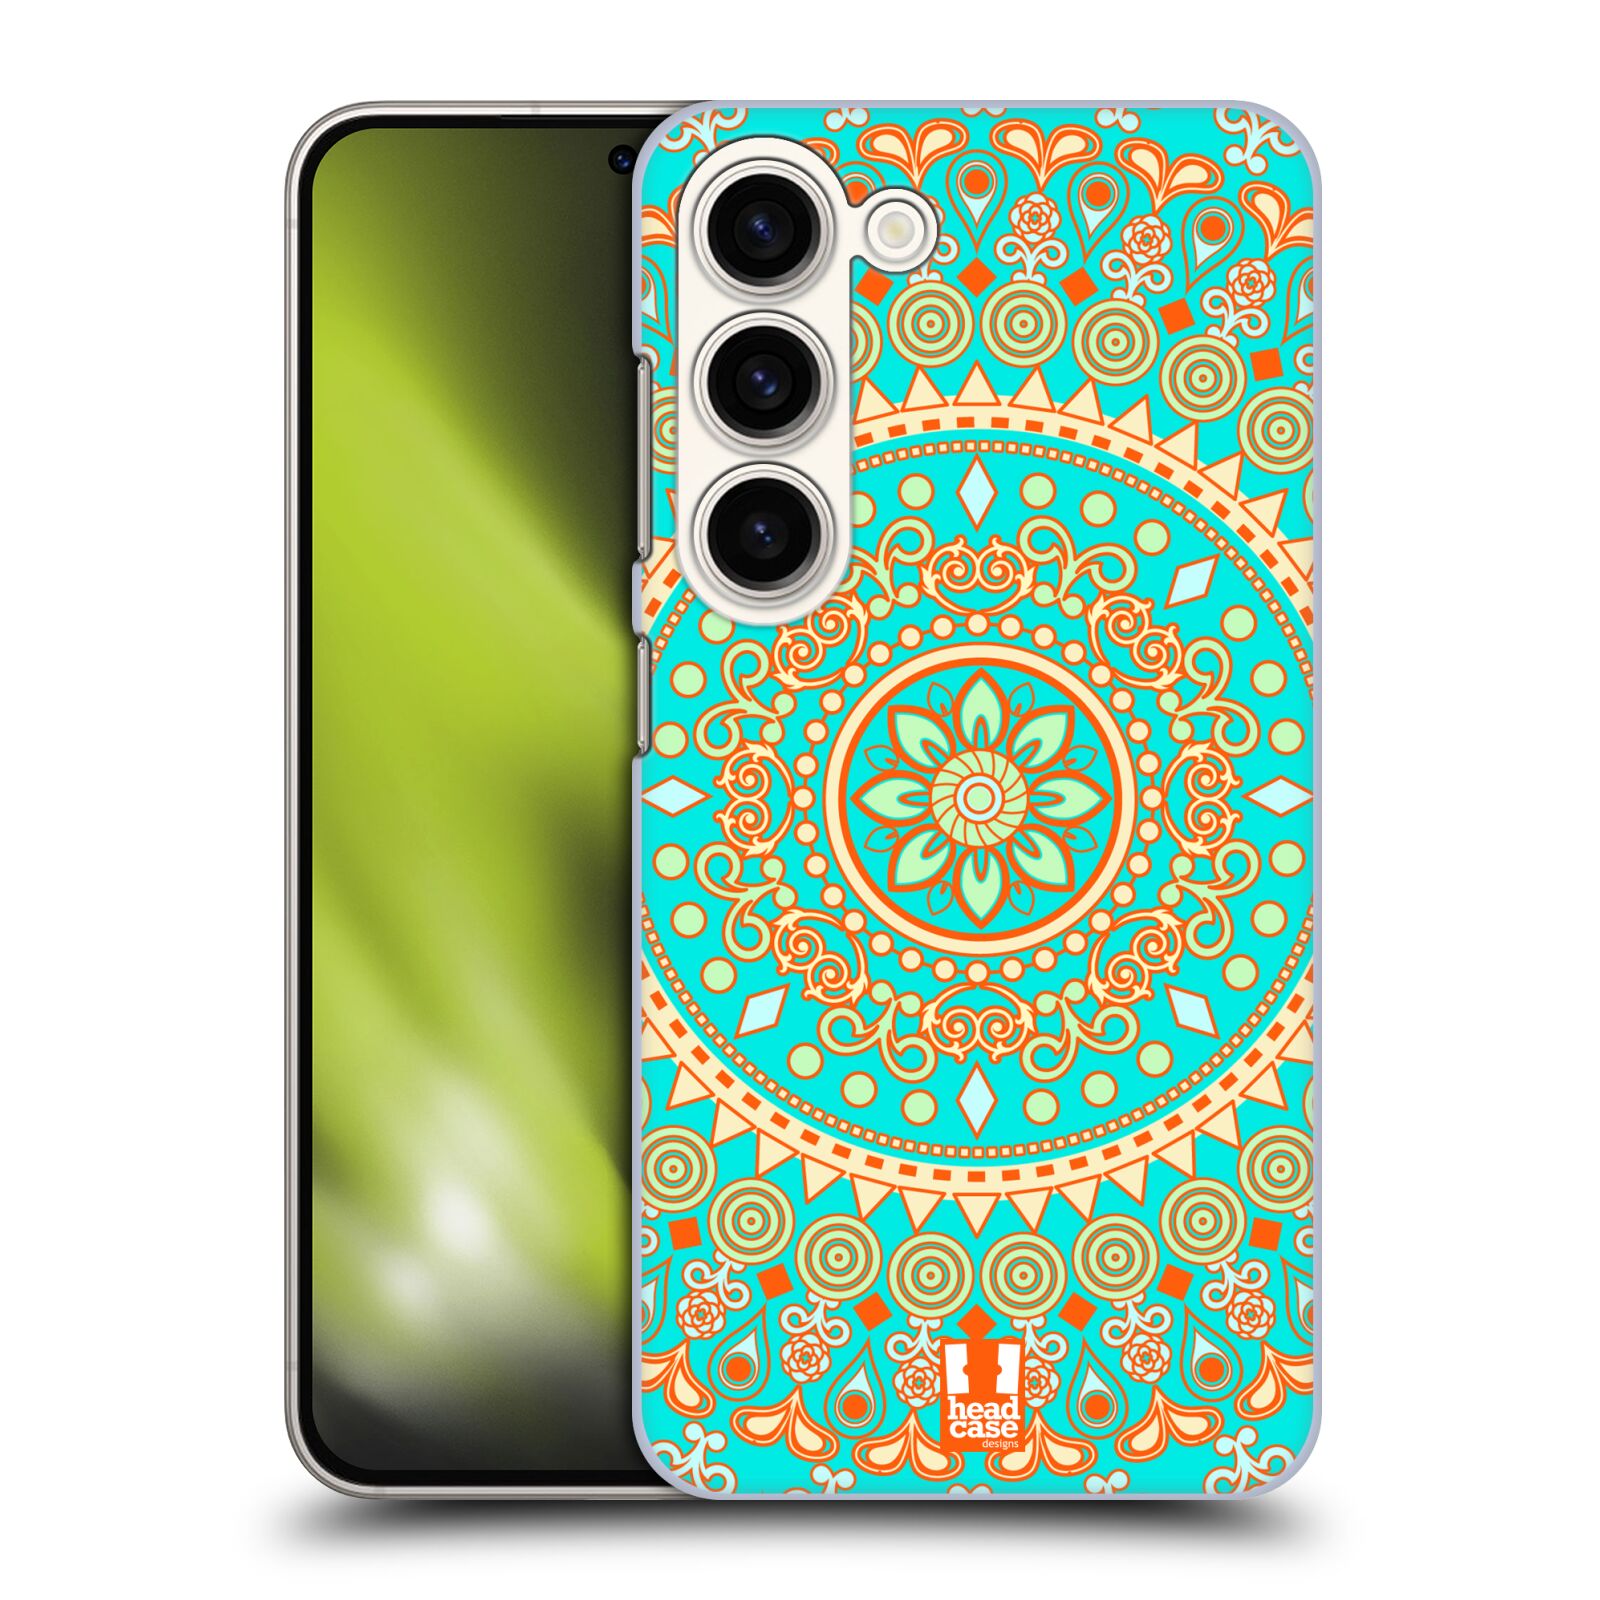 Plastový obal HEAD CASE na mobil Samsung Galaxy S23 vzor Indie Mandala slunce barevný motiv TYRKYSOVÁ, ZELENÁ